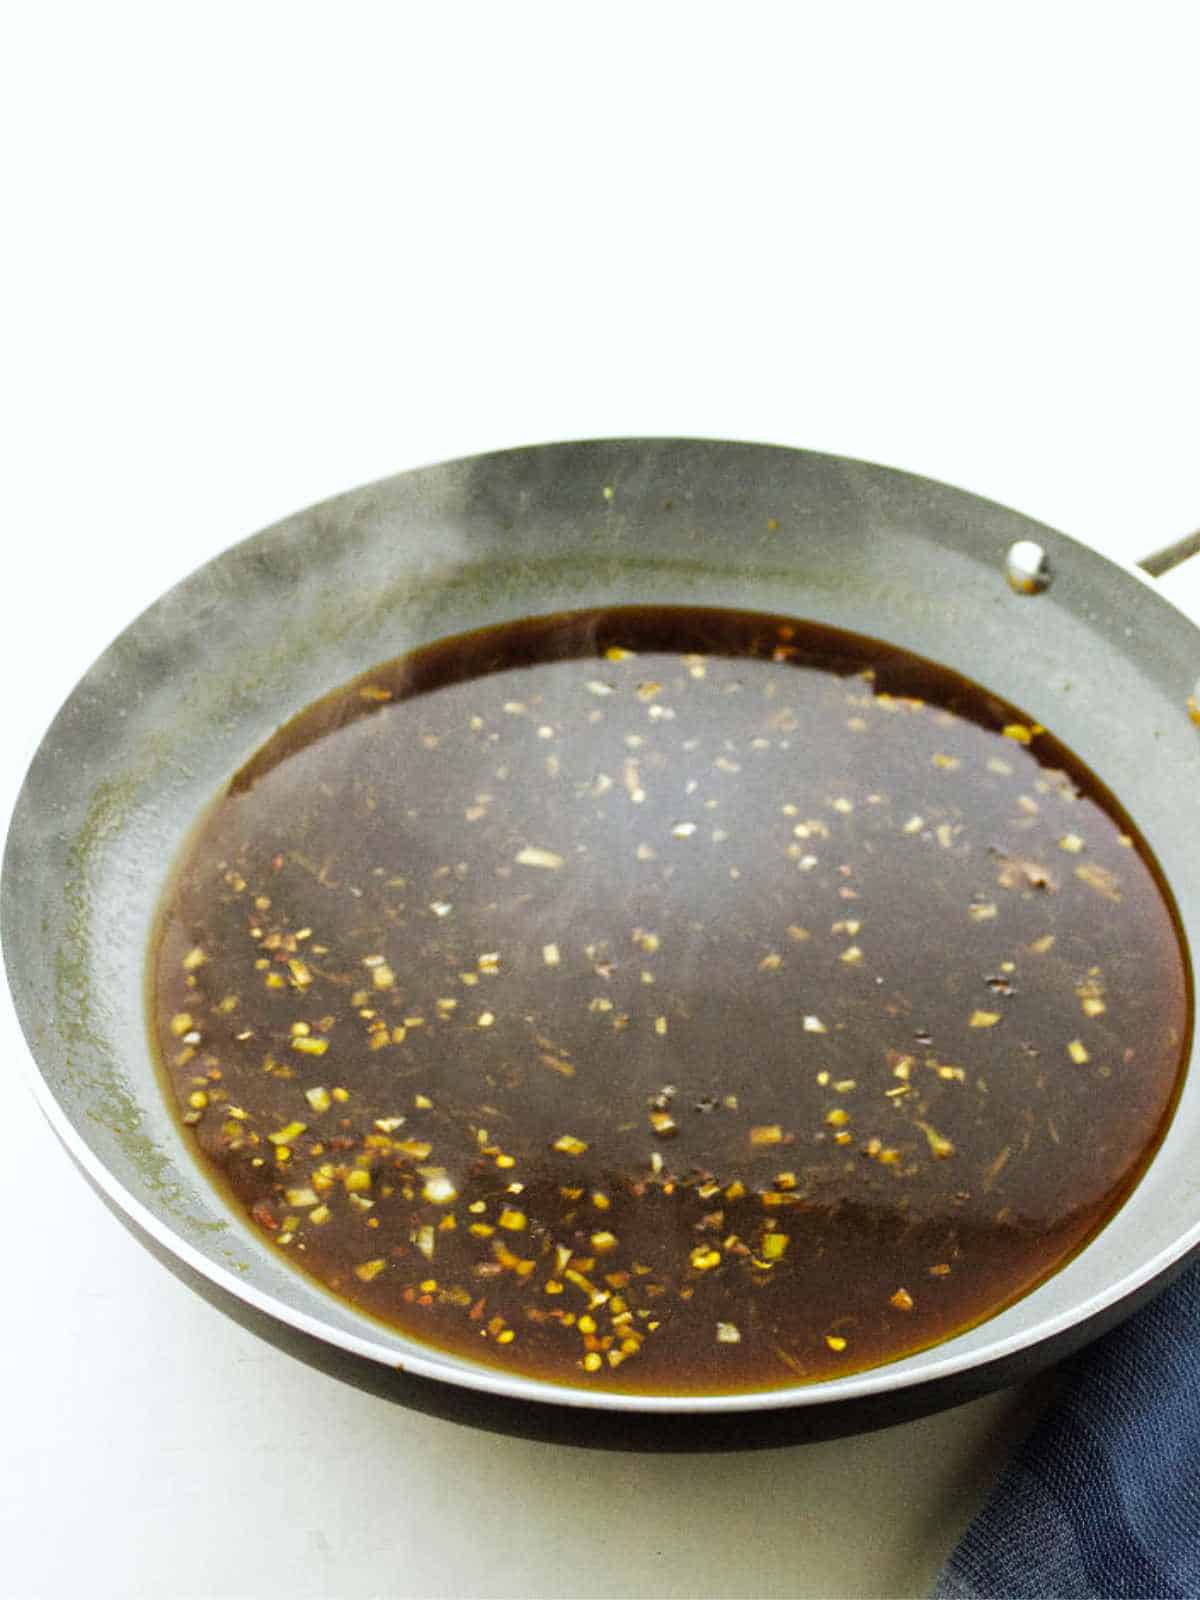 large skillet simmering sauce.